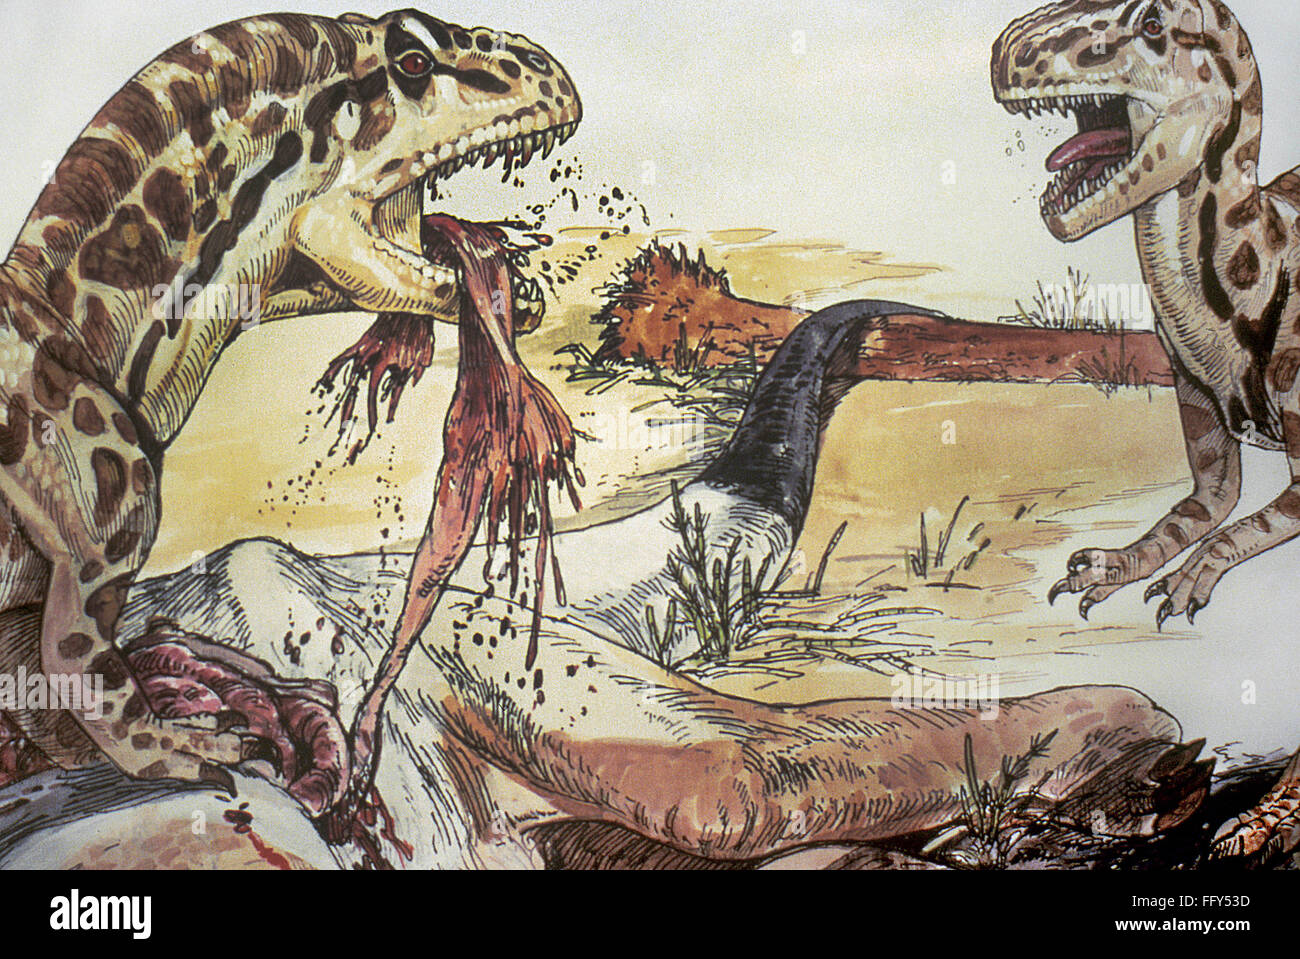 DINOSAURS: ALLOSAURUS. /nAllosauruses devouring their prey. American illustration, late 20th century. Stock Photo